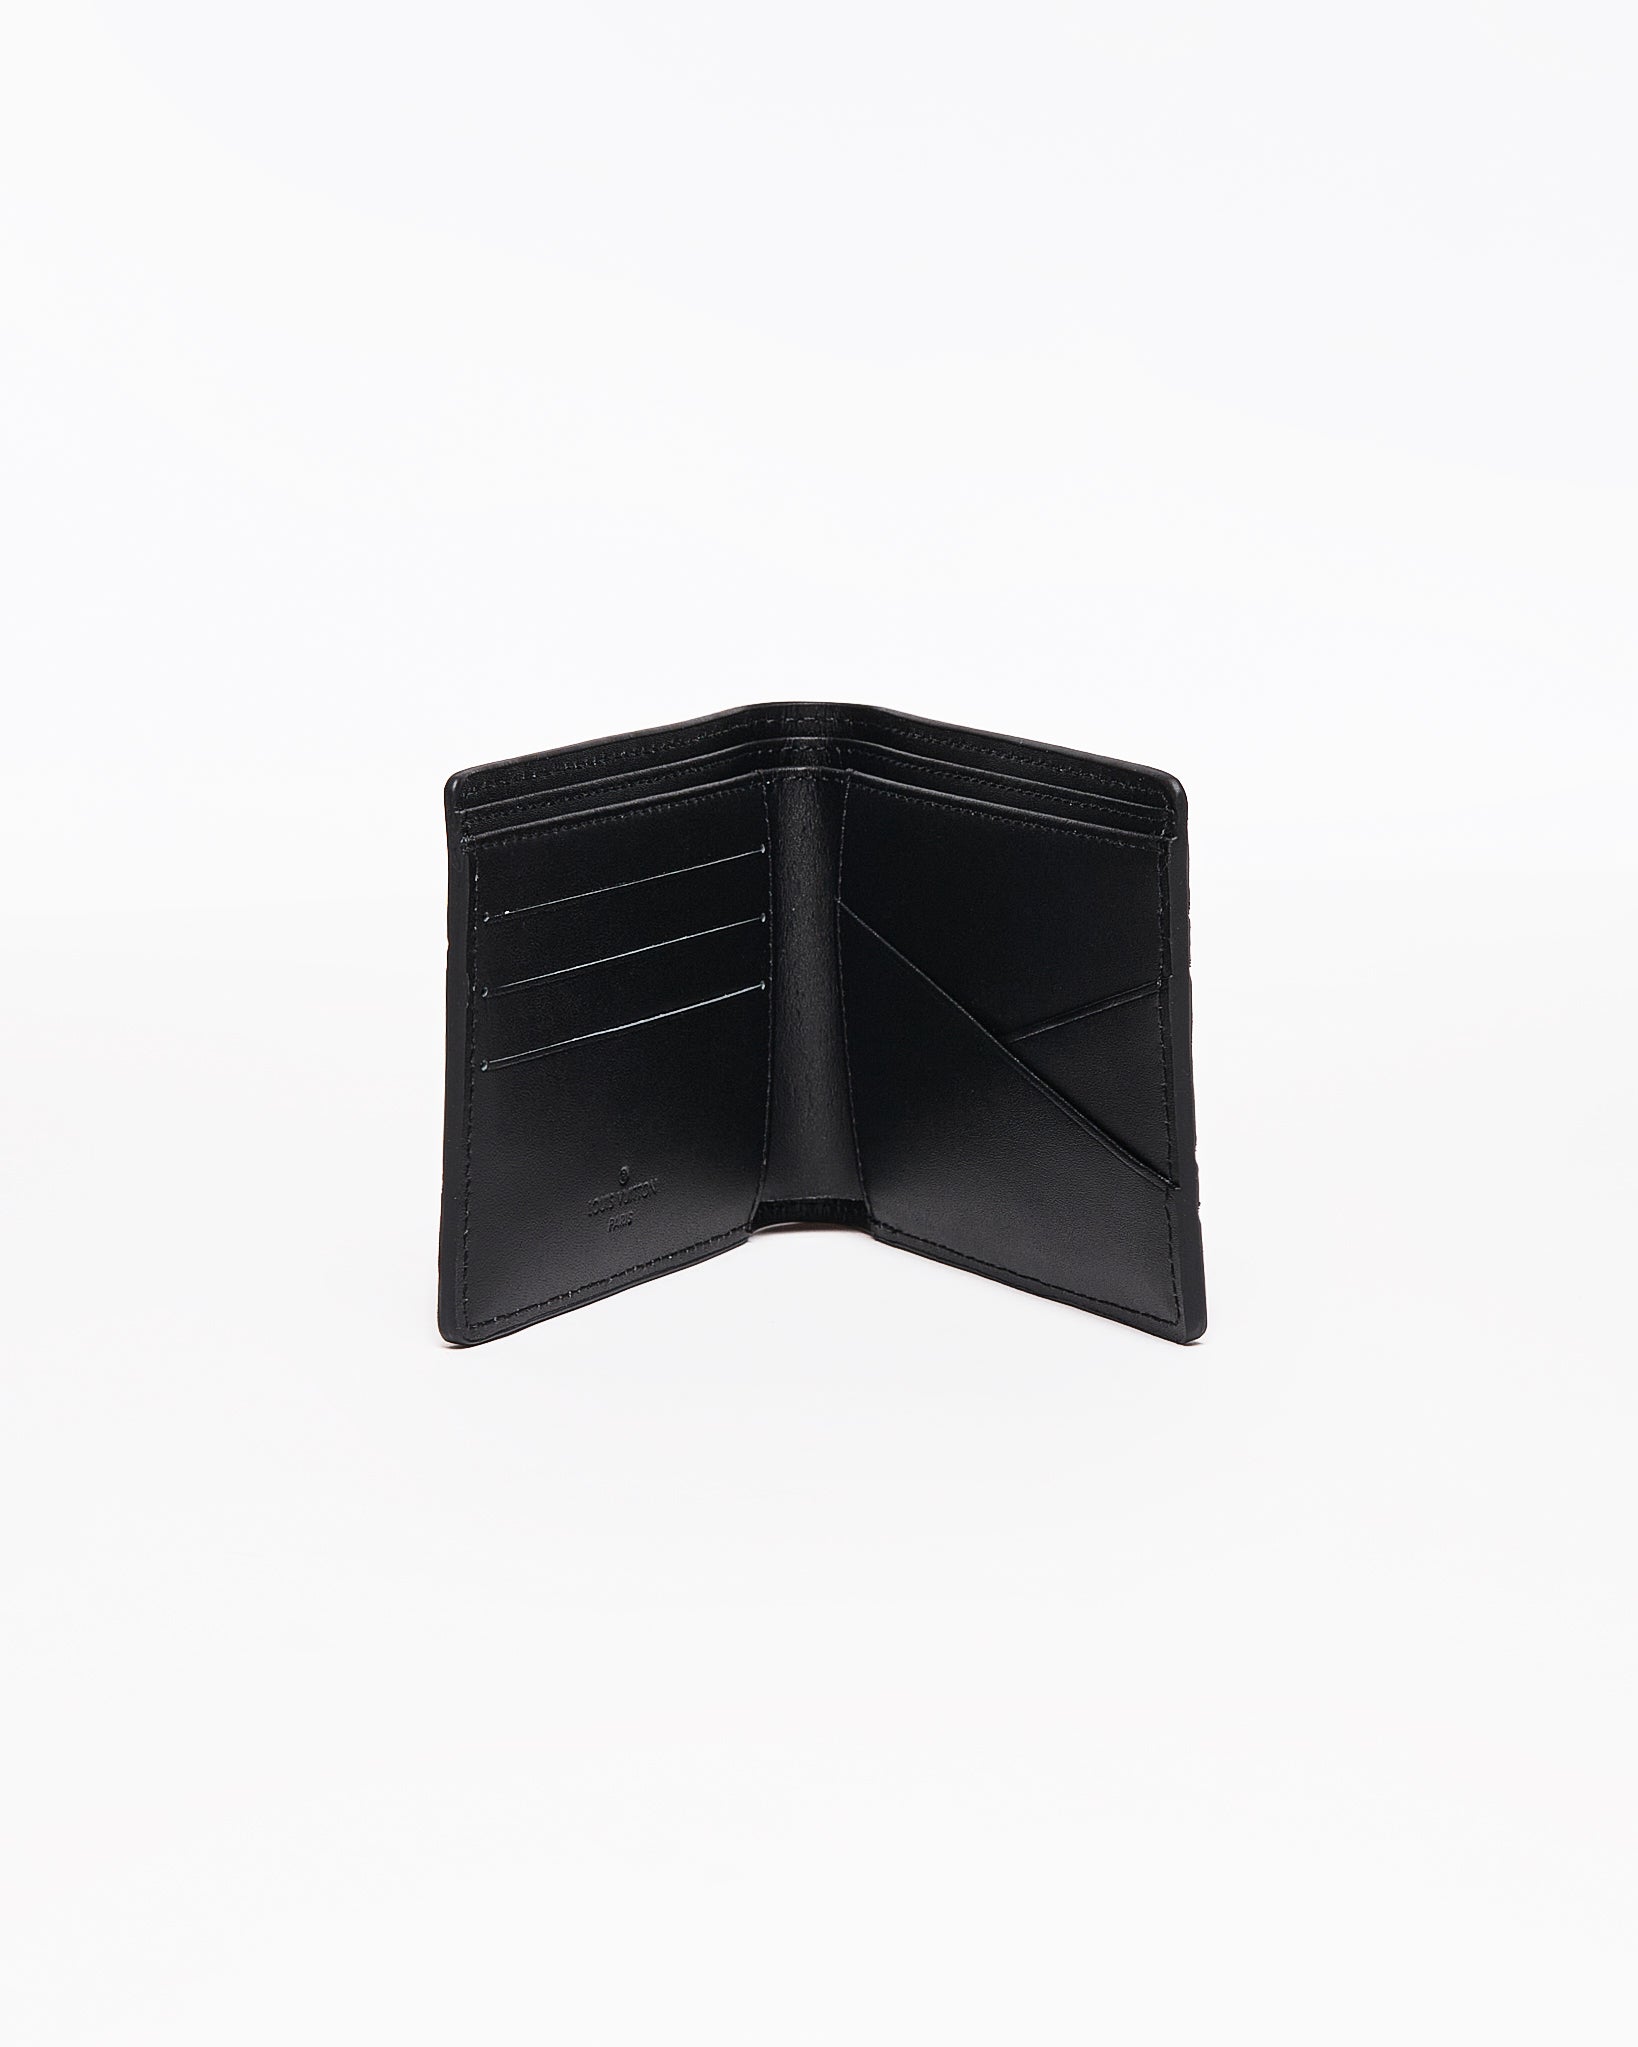 LV 3D Monogram Men Black Wallet 39.90